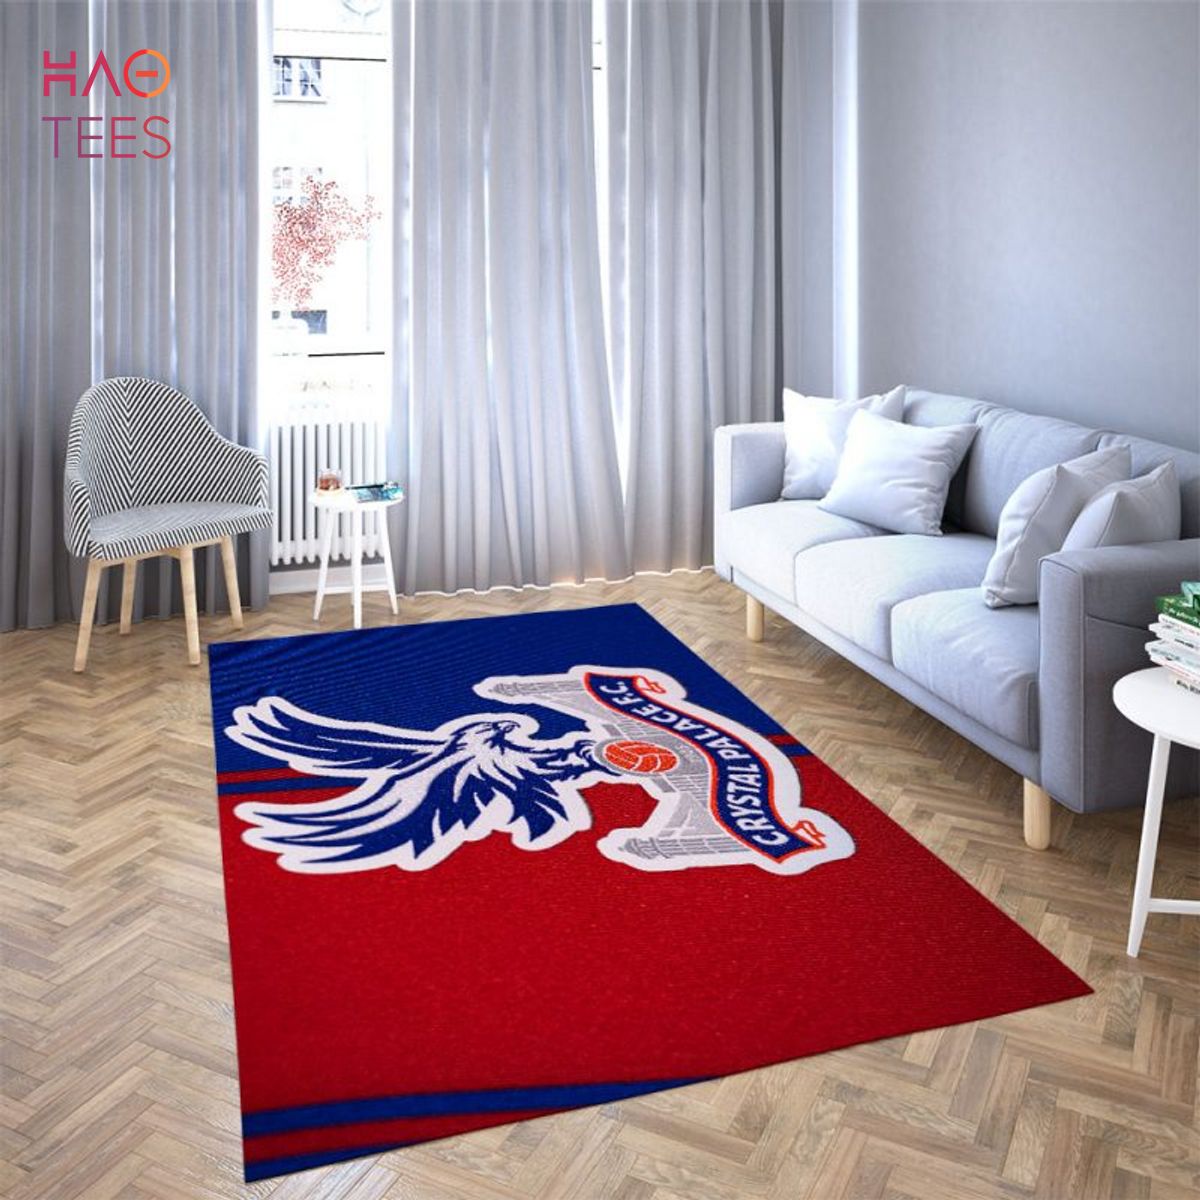 BEST Crystal Palace Football Club Carpet Living Room Rugs Doormat